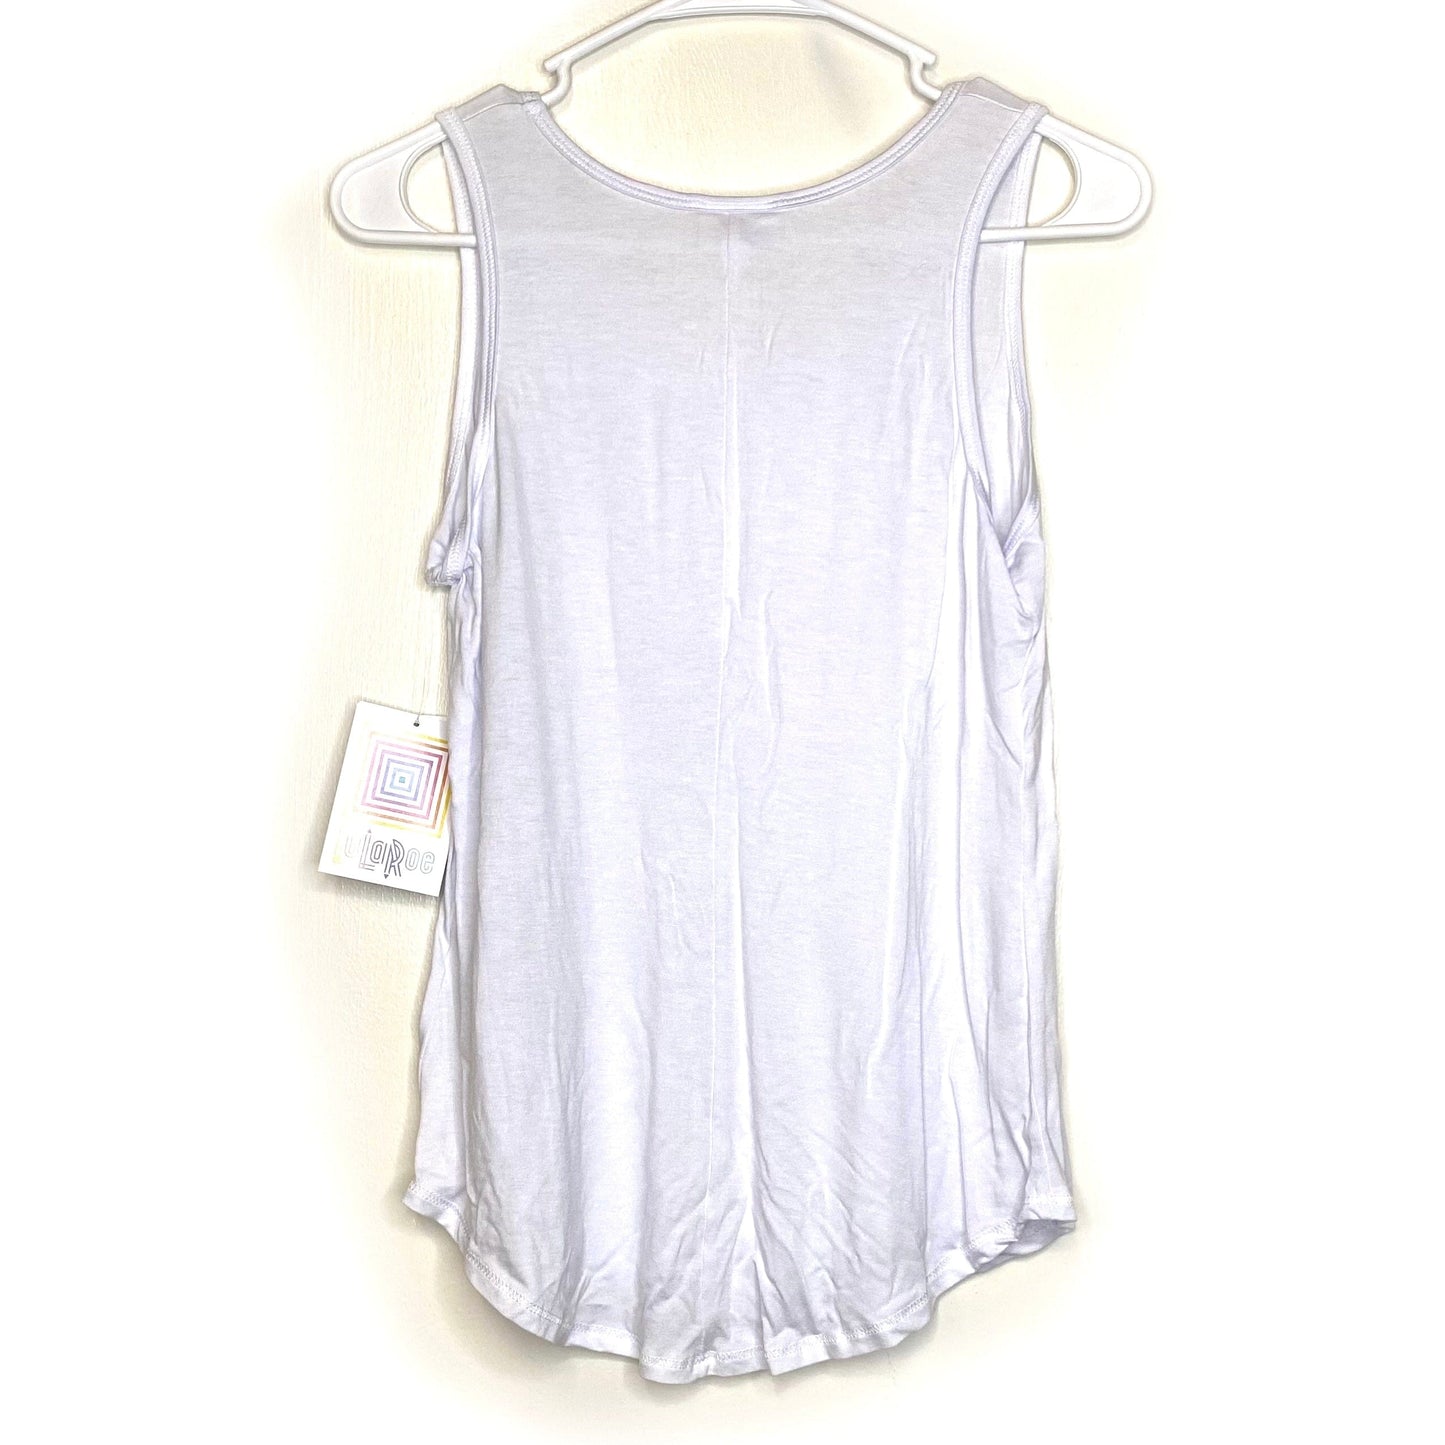 LuLaRoe Womens Size S Artic White Tank Top Shirt Sleeveless NWT